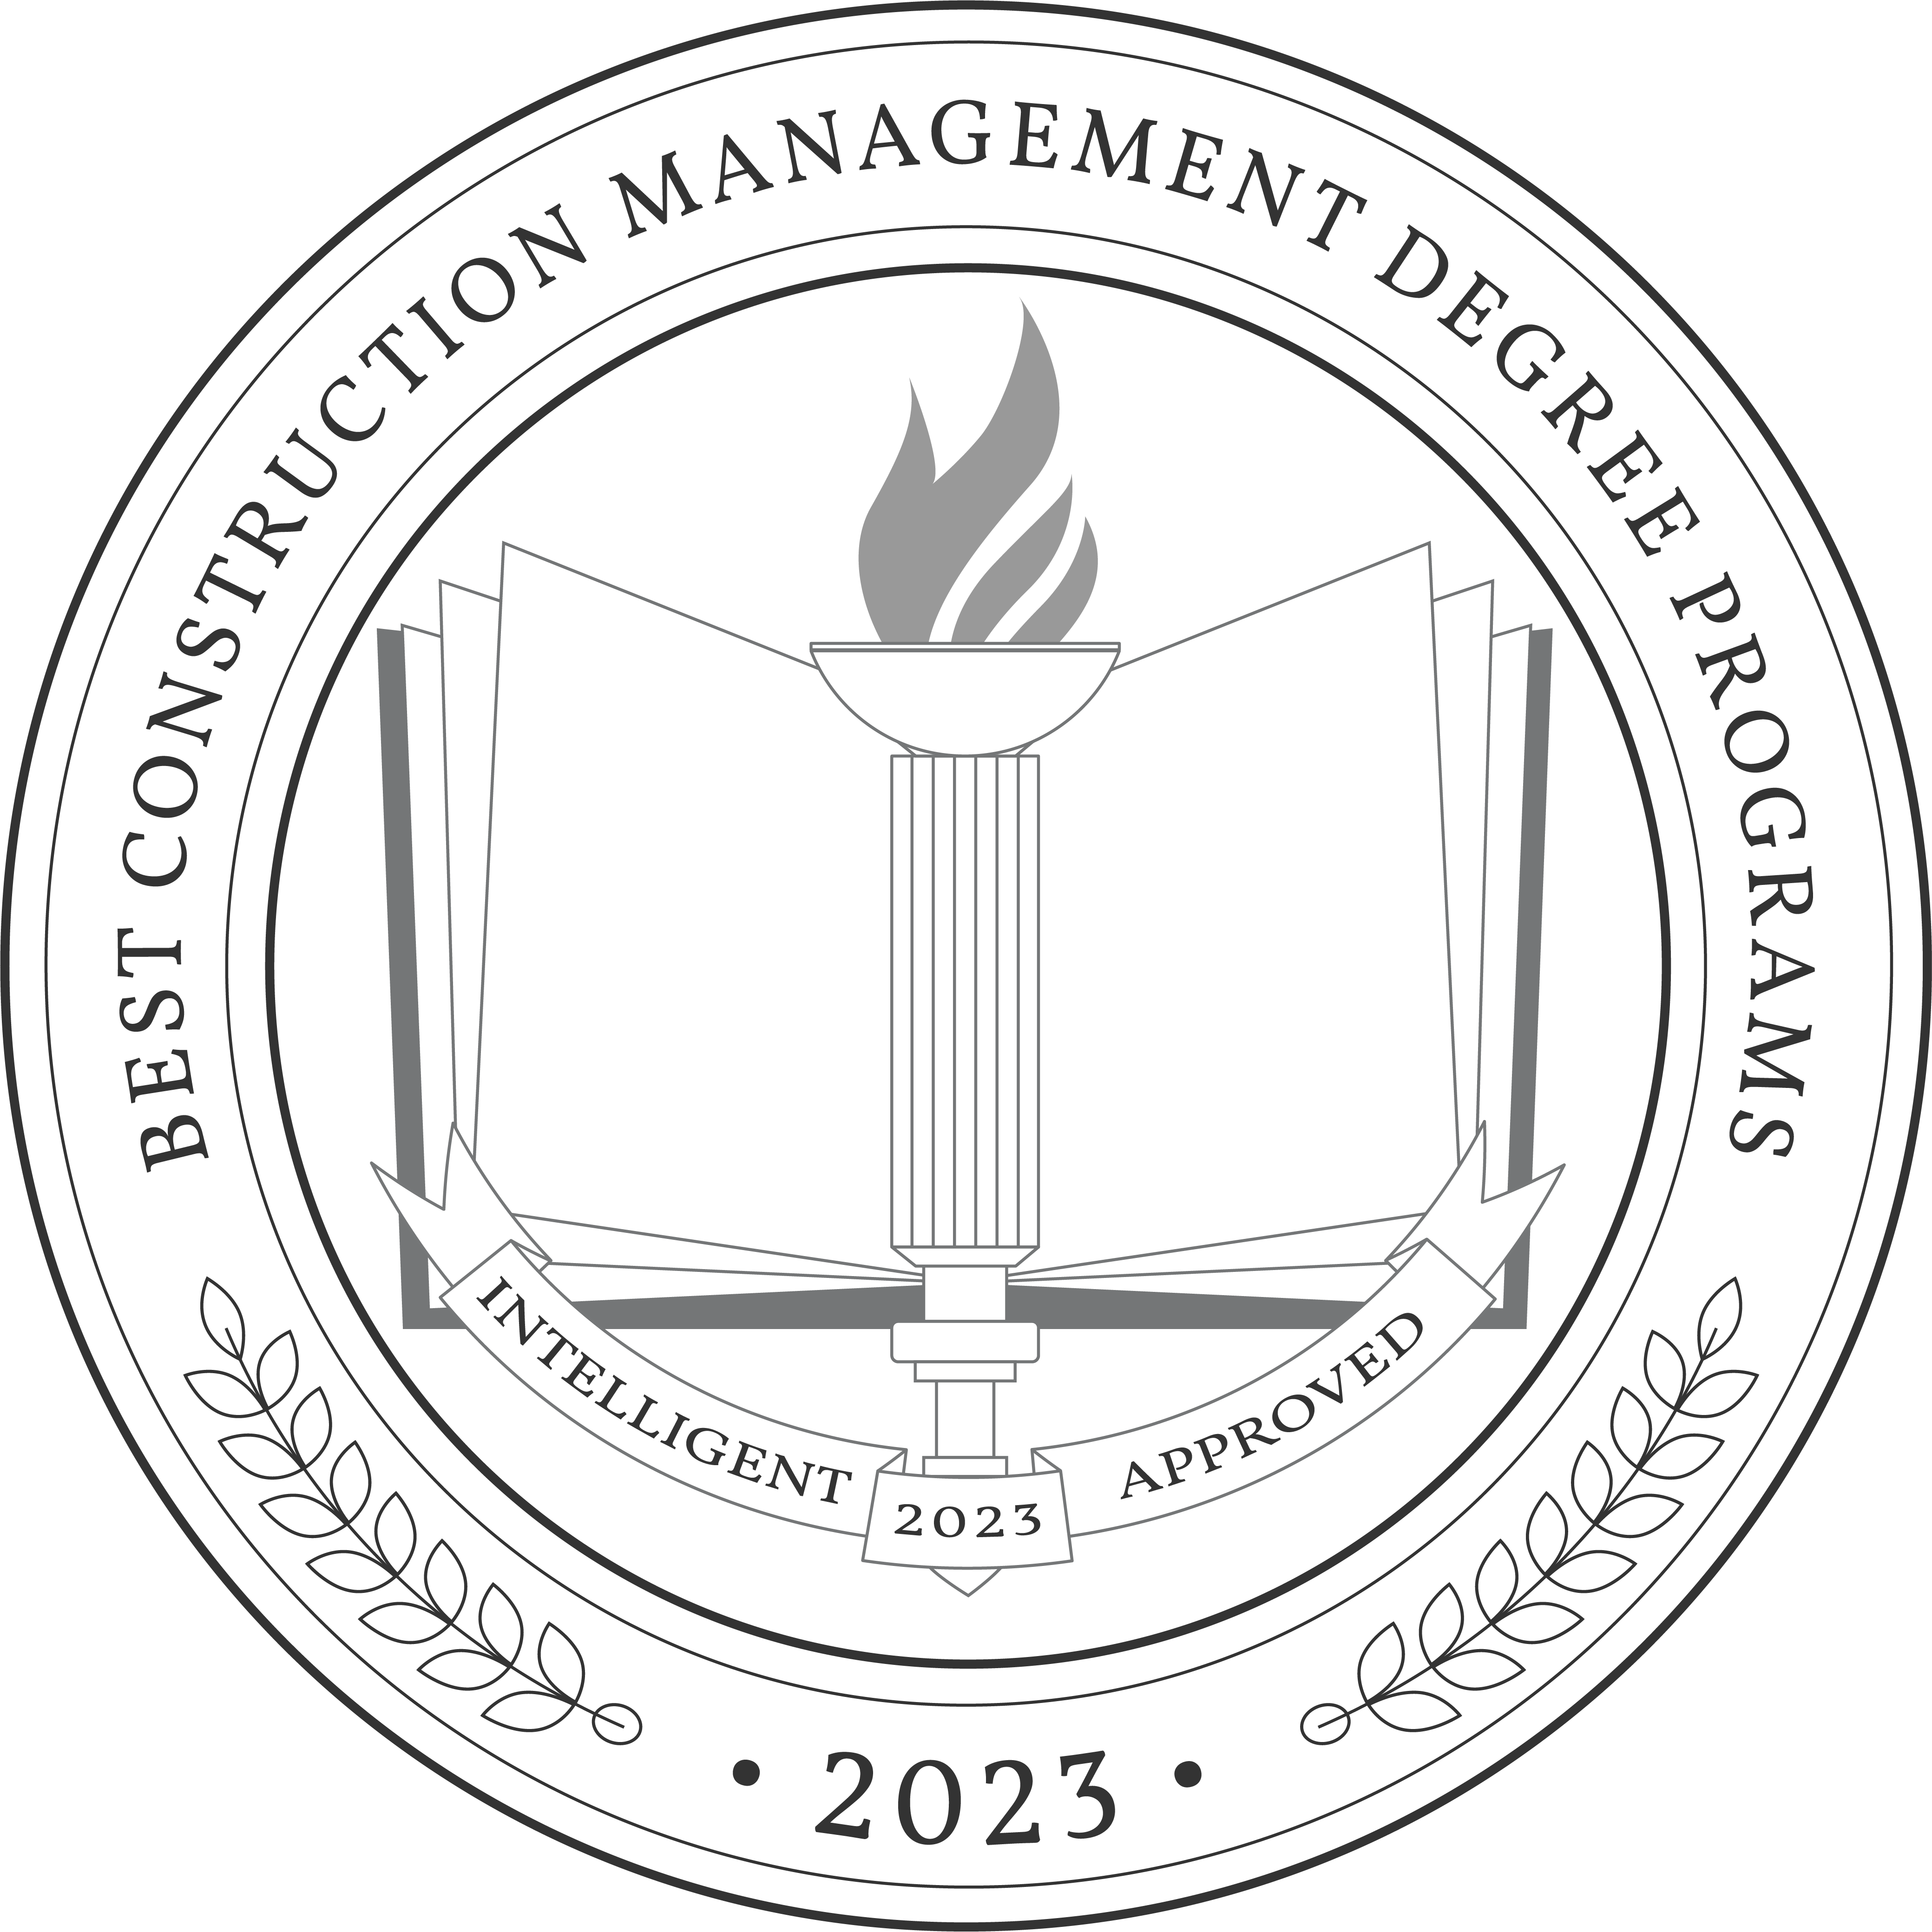 https://www.intelligent.com/wp-content/uploads/2022/11/Best-Construction-Management-Degree-Programs-2023-Badge.png